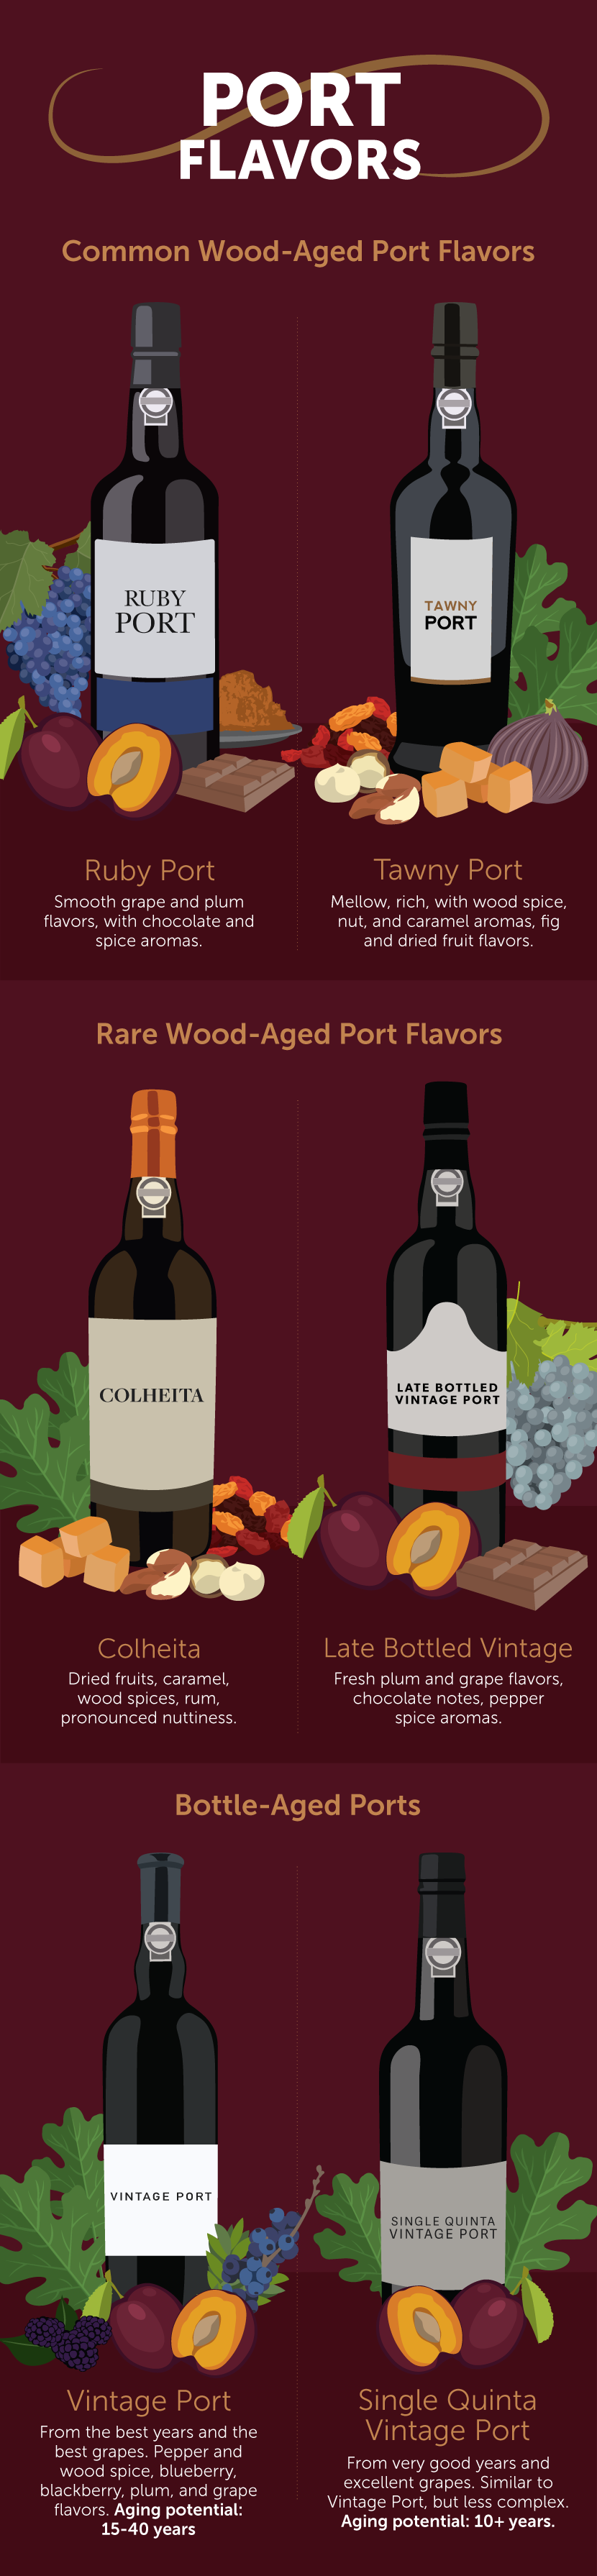 Port Flavors - A Port Wine Primer